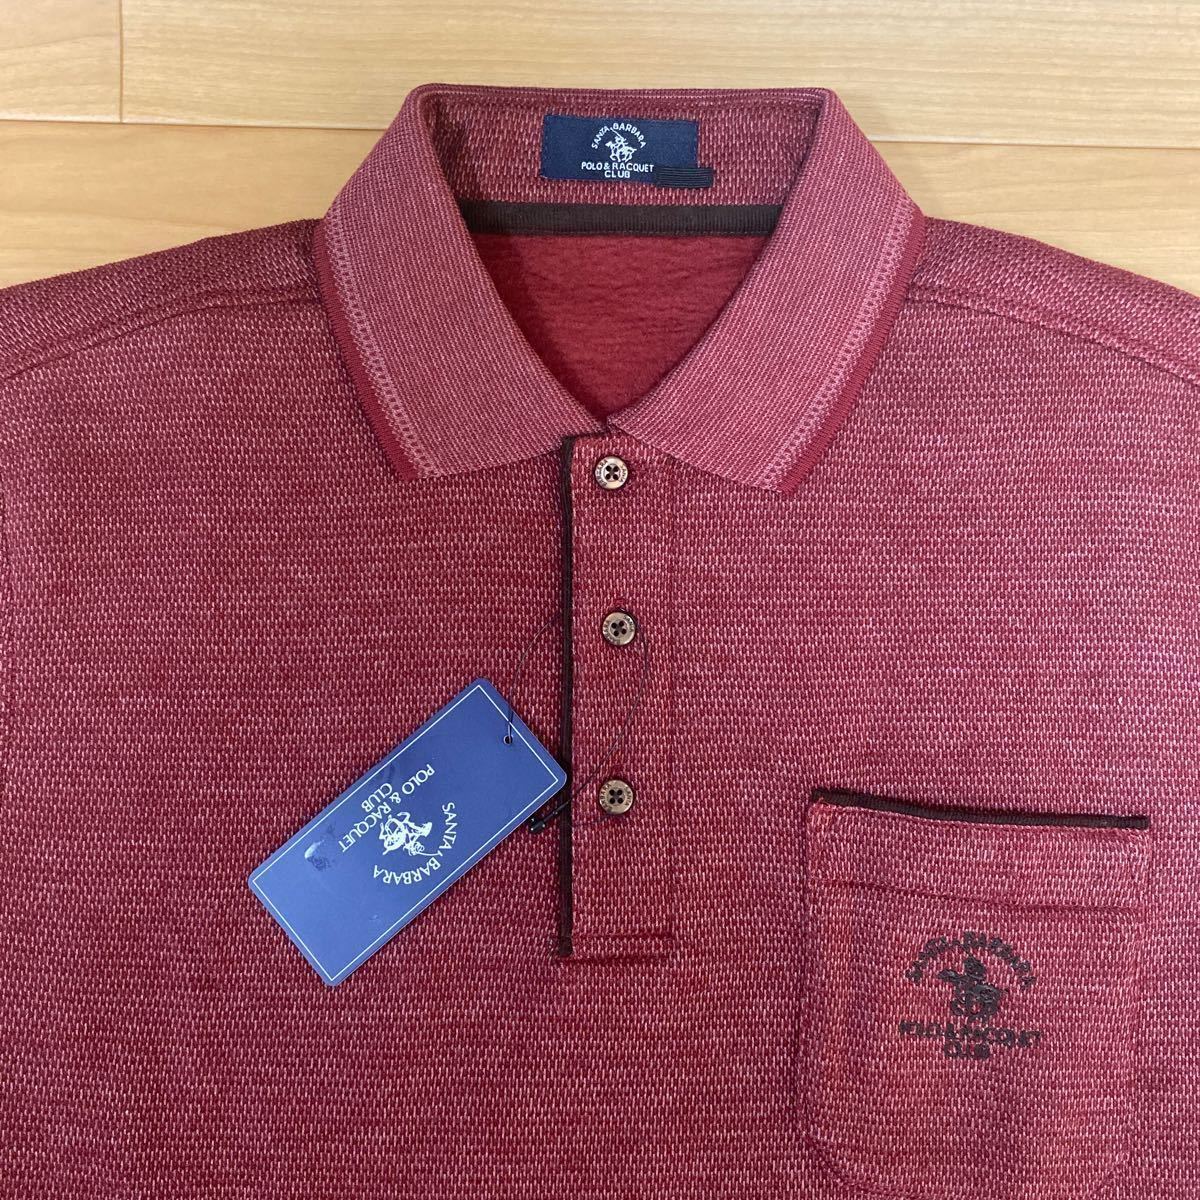 LL ②サンタバーバラポロラケットクラブ 新品あったか 長袖ポロシャツ 襟付きシャツ 赤 メンズ紳士 アウトドア スポーツ ゴルフウェア golf